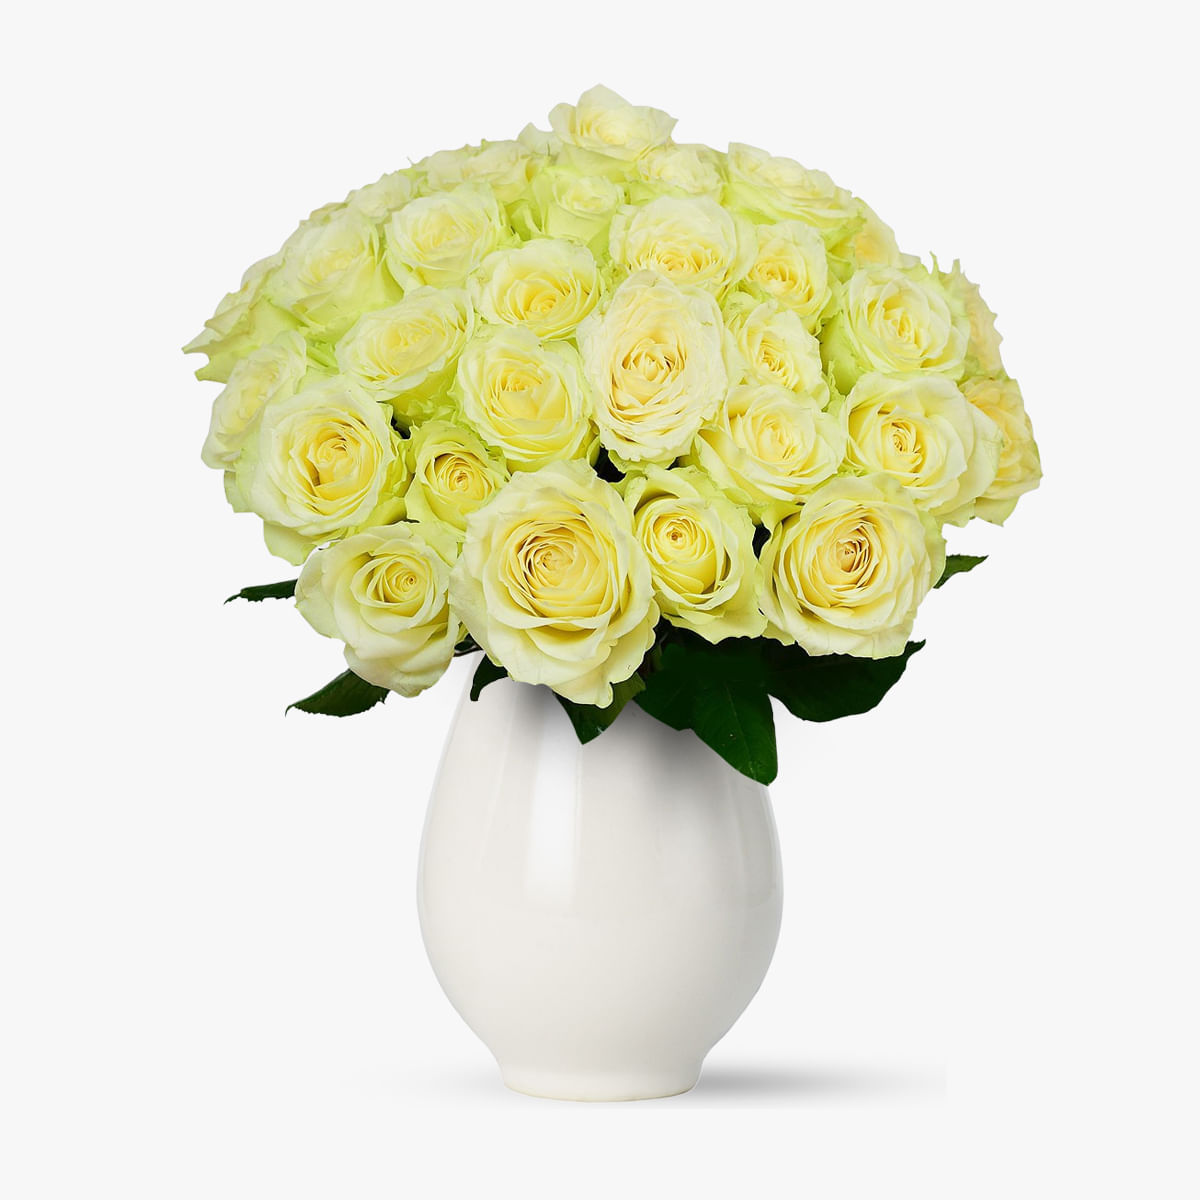 Buchet de 45 trandafiri albi – Standard albi